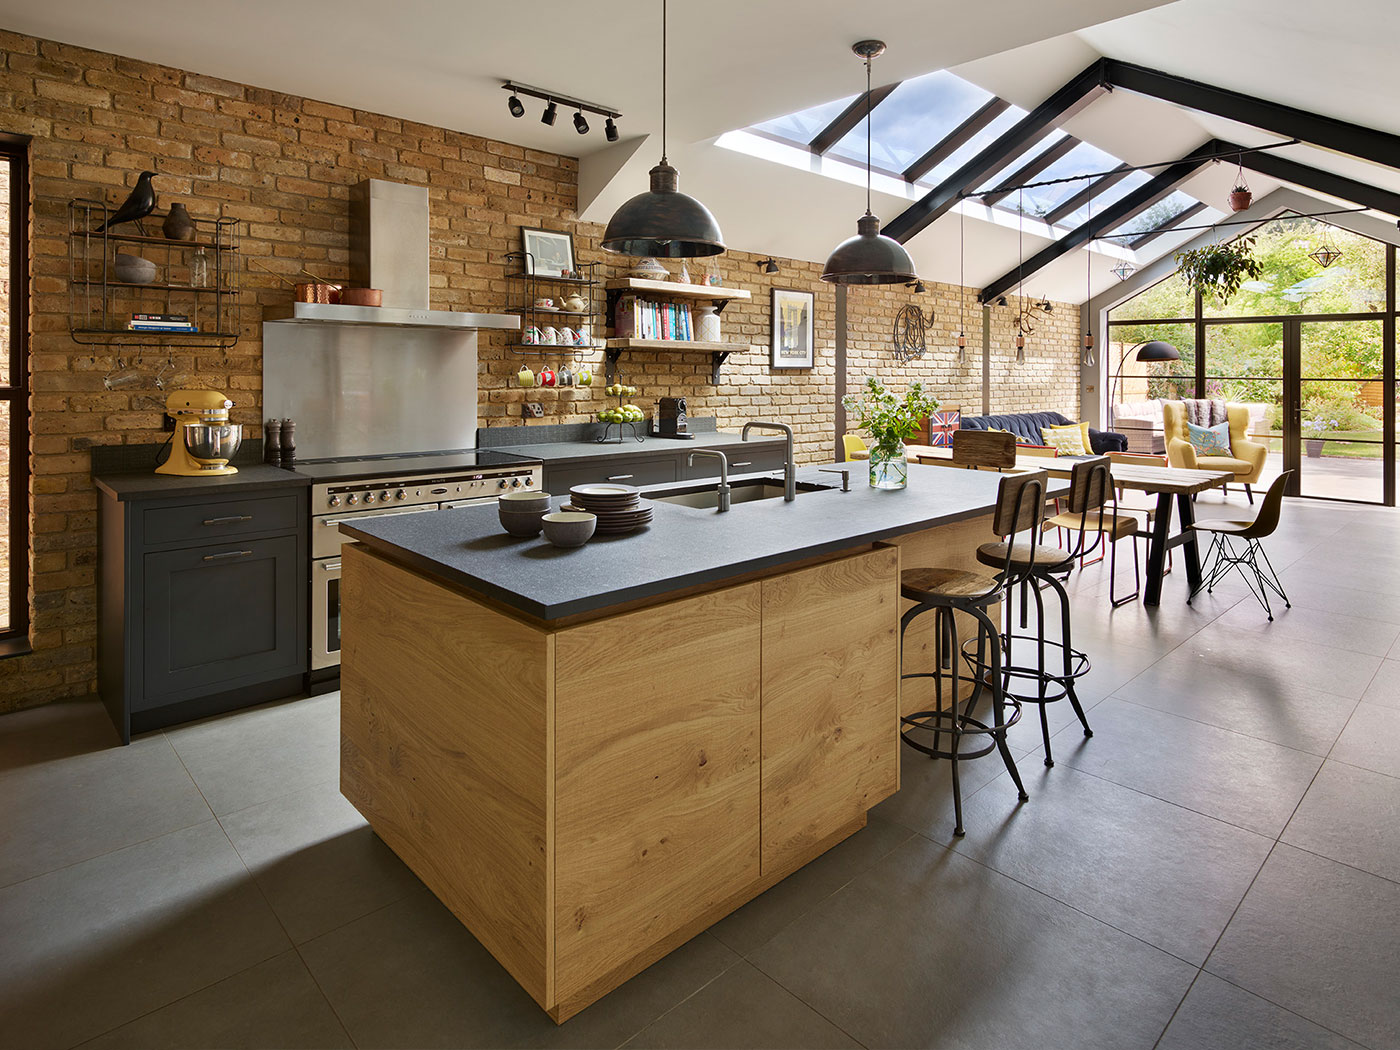 Bespoke luxury kitchen with oak island and granite work surfaces